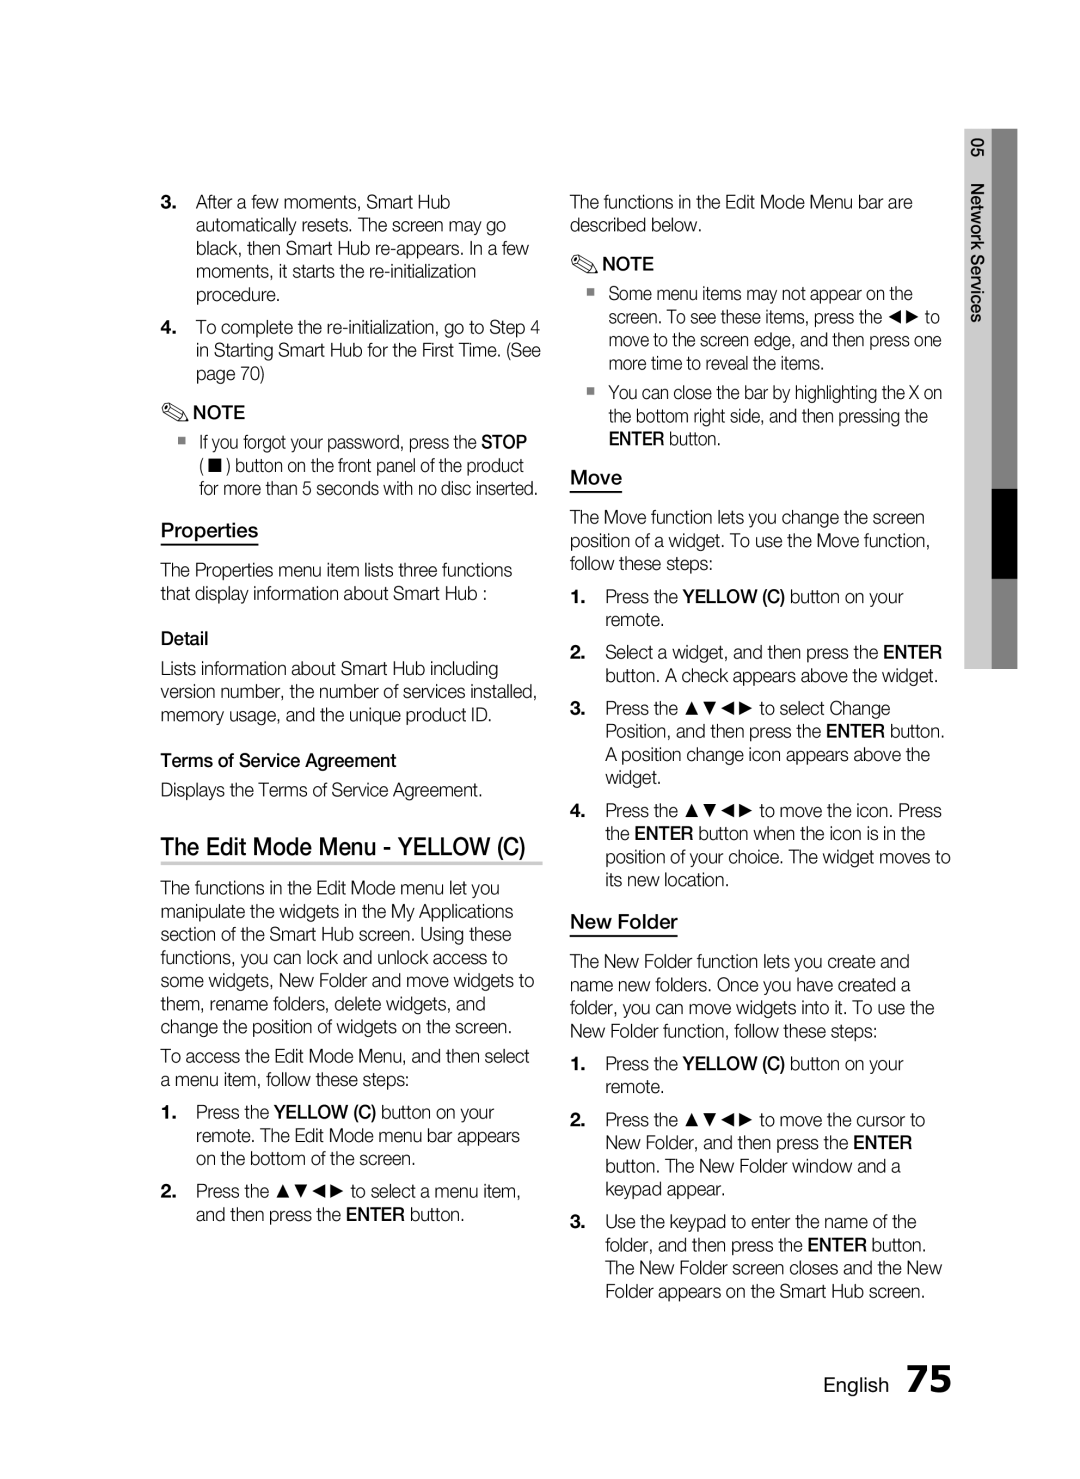 Samsung HW-D7000 user manual The Edit Mode Menu - YELLOW C, Properties, Move, New Folder, English 